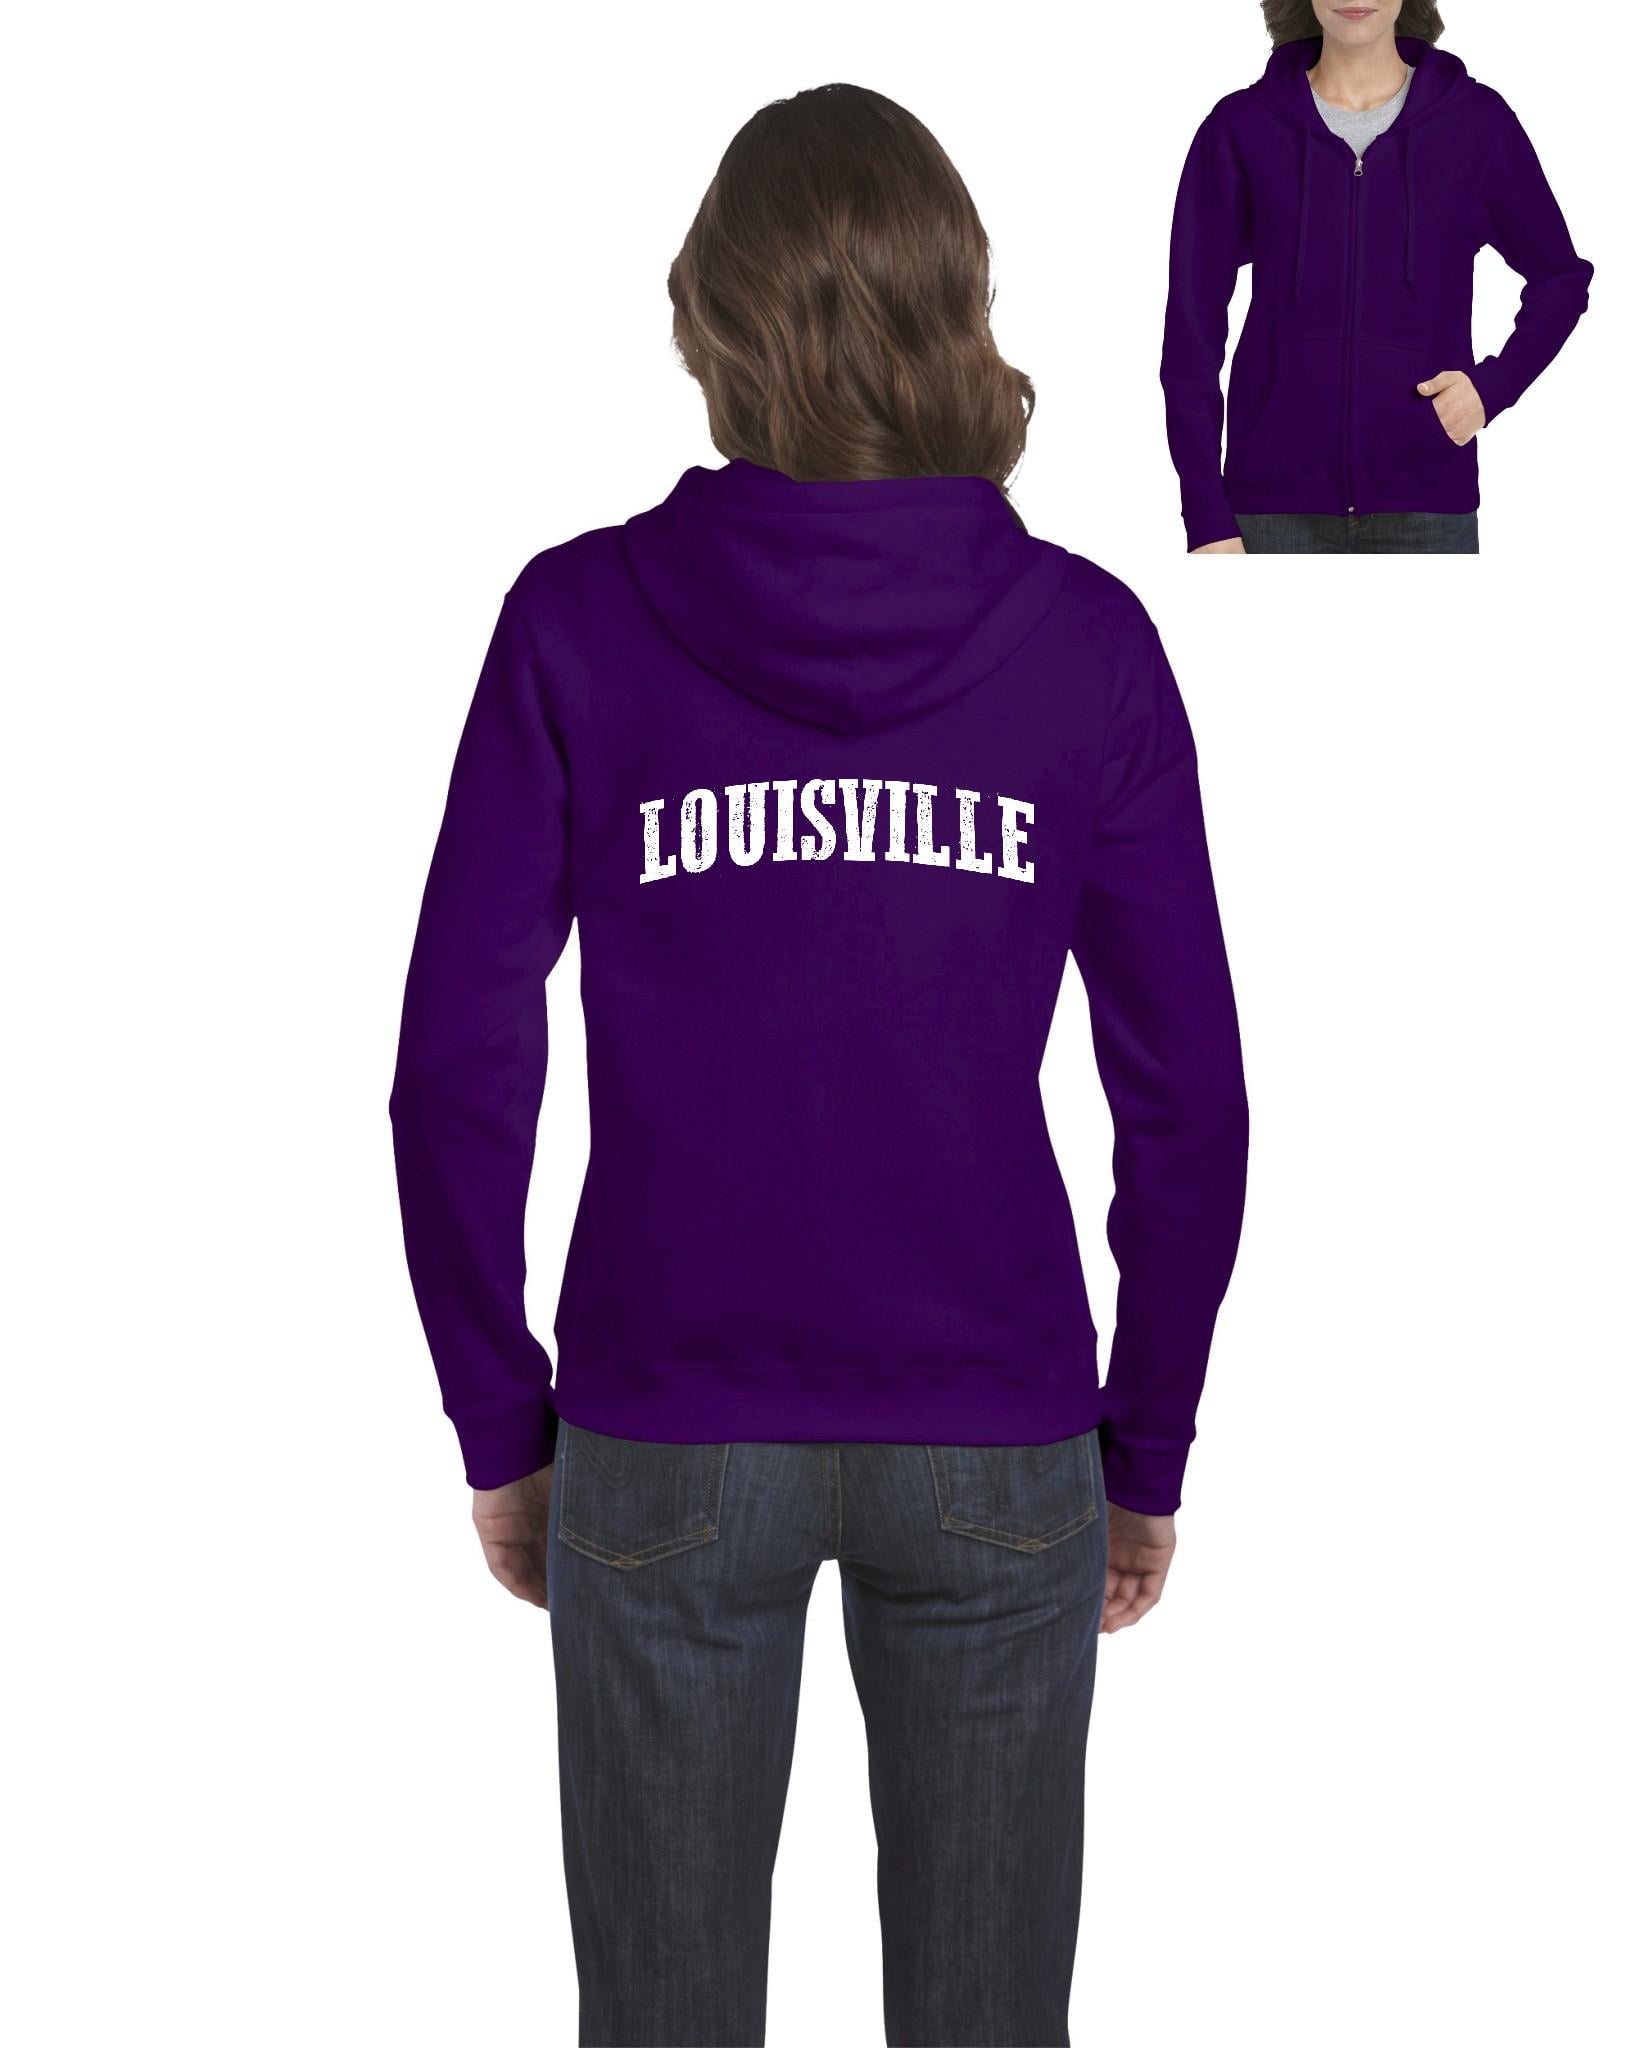 Artix - Plus Sweatshirts and Hoodies - Louisville 